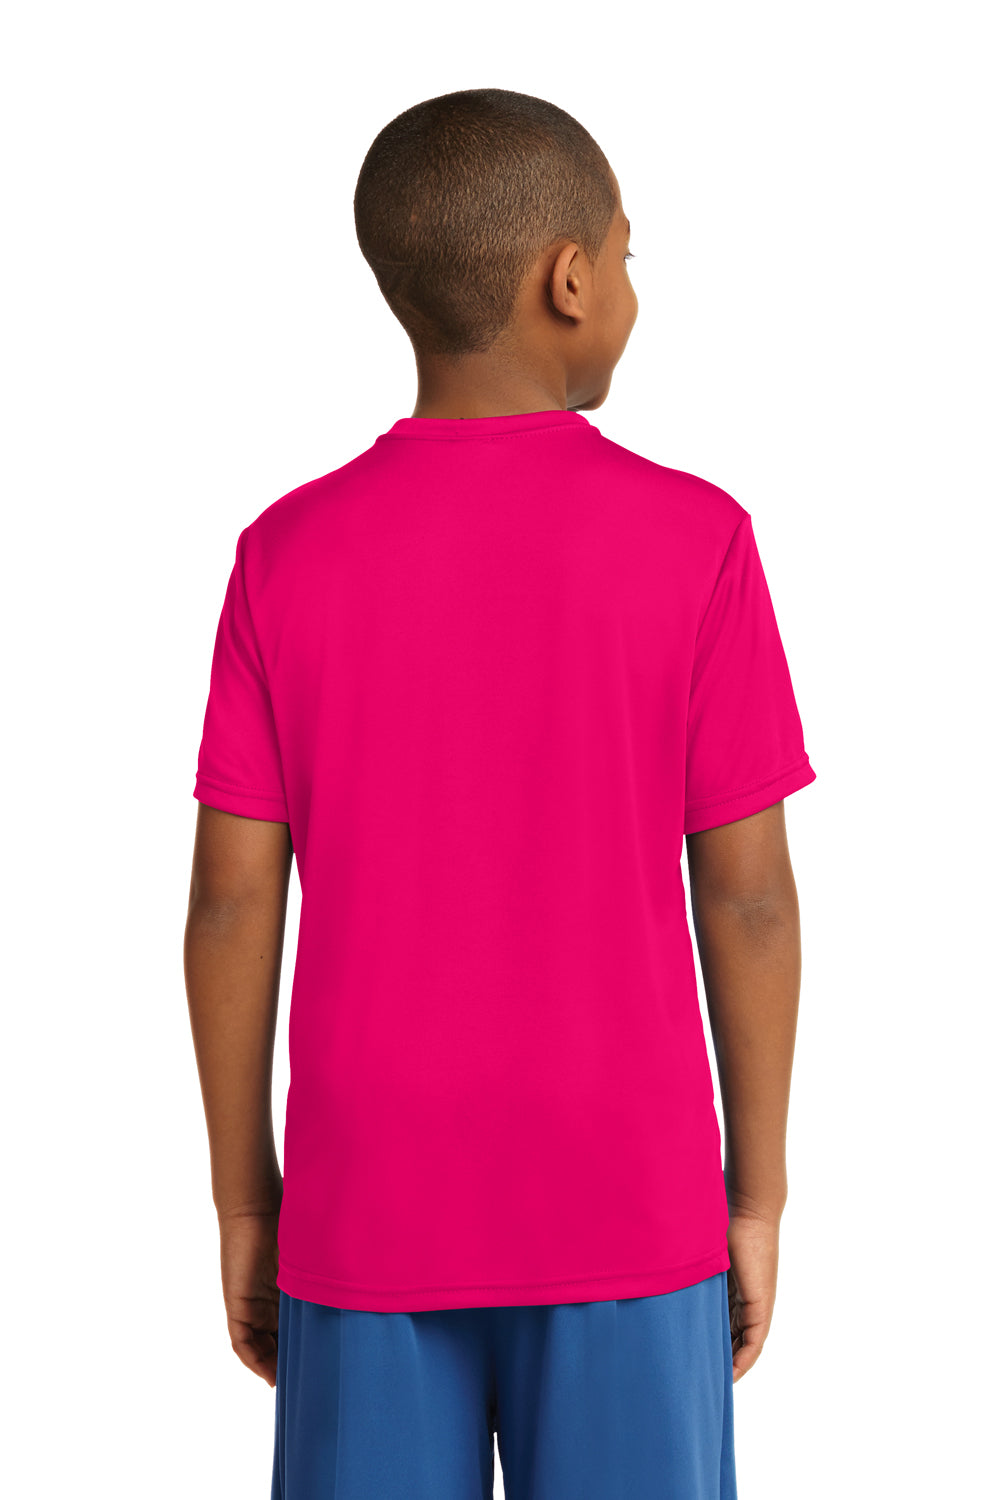 Sport-Tek YST350 Youth Competitor Moisture Wicking Short Sleeve Crewneck T-Shirt Fuchsia Pink Back